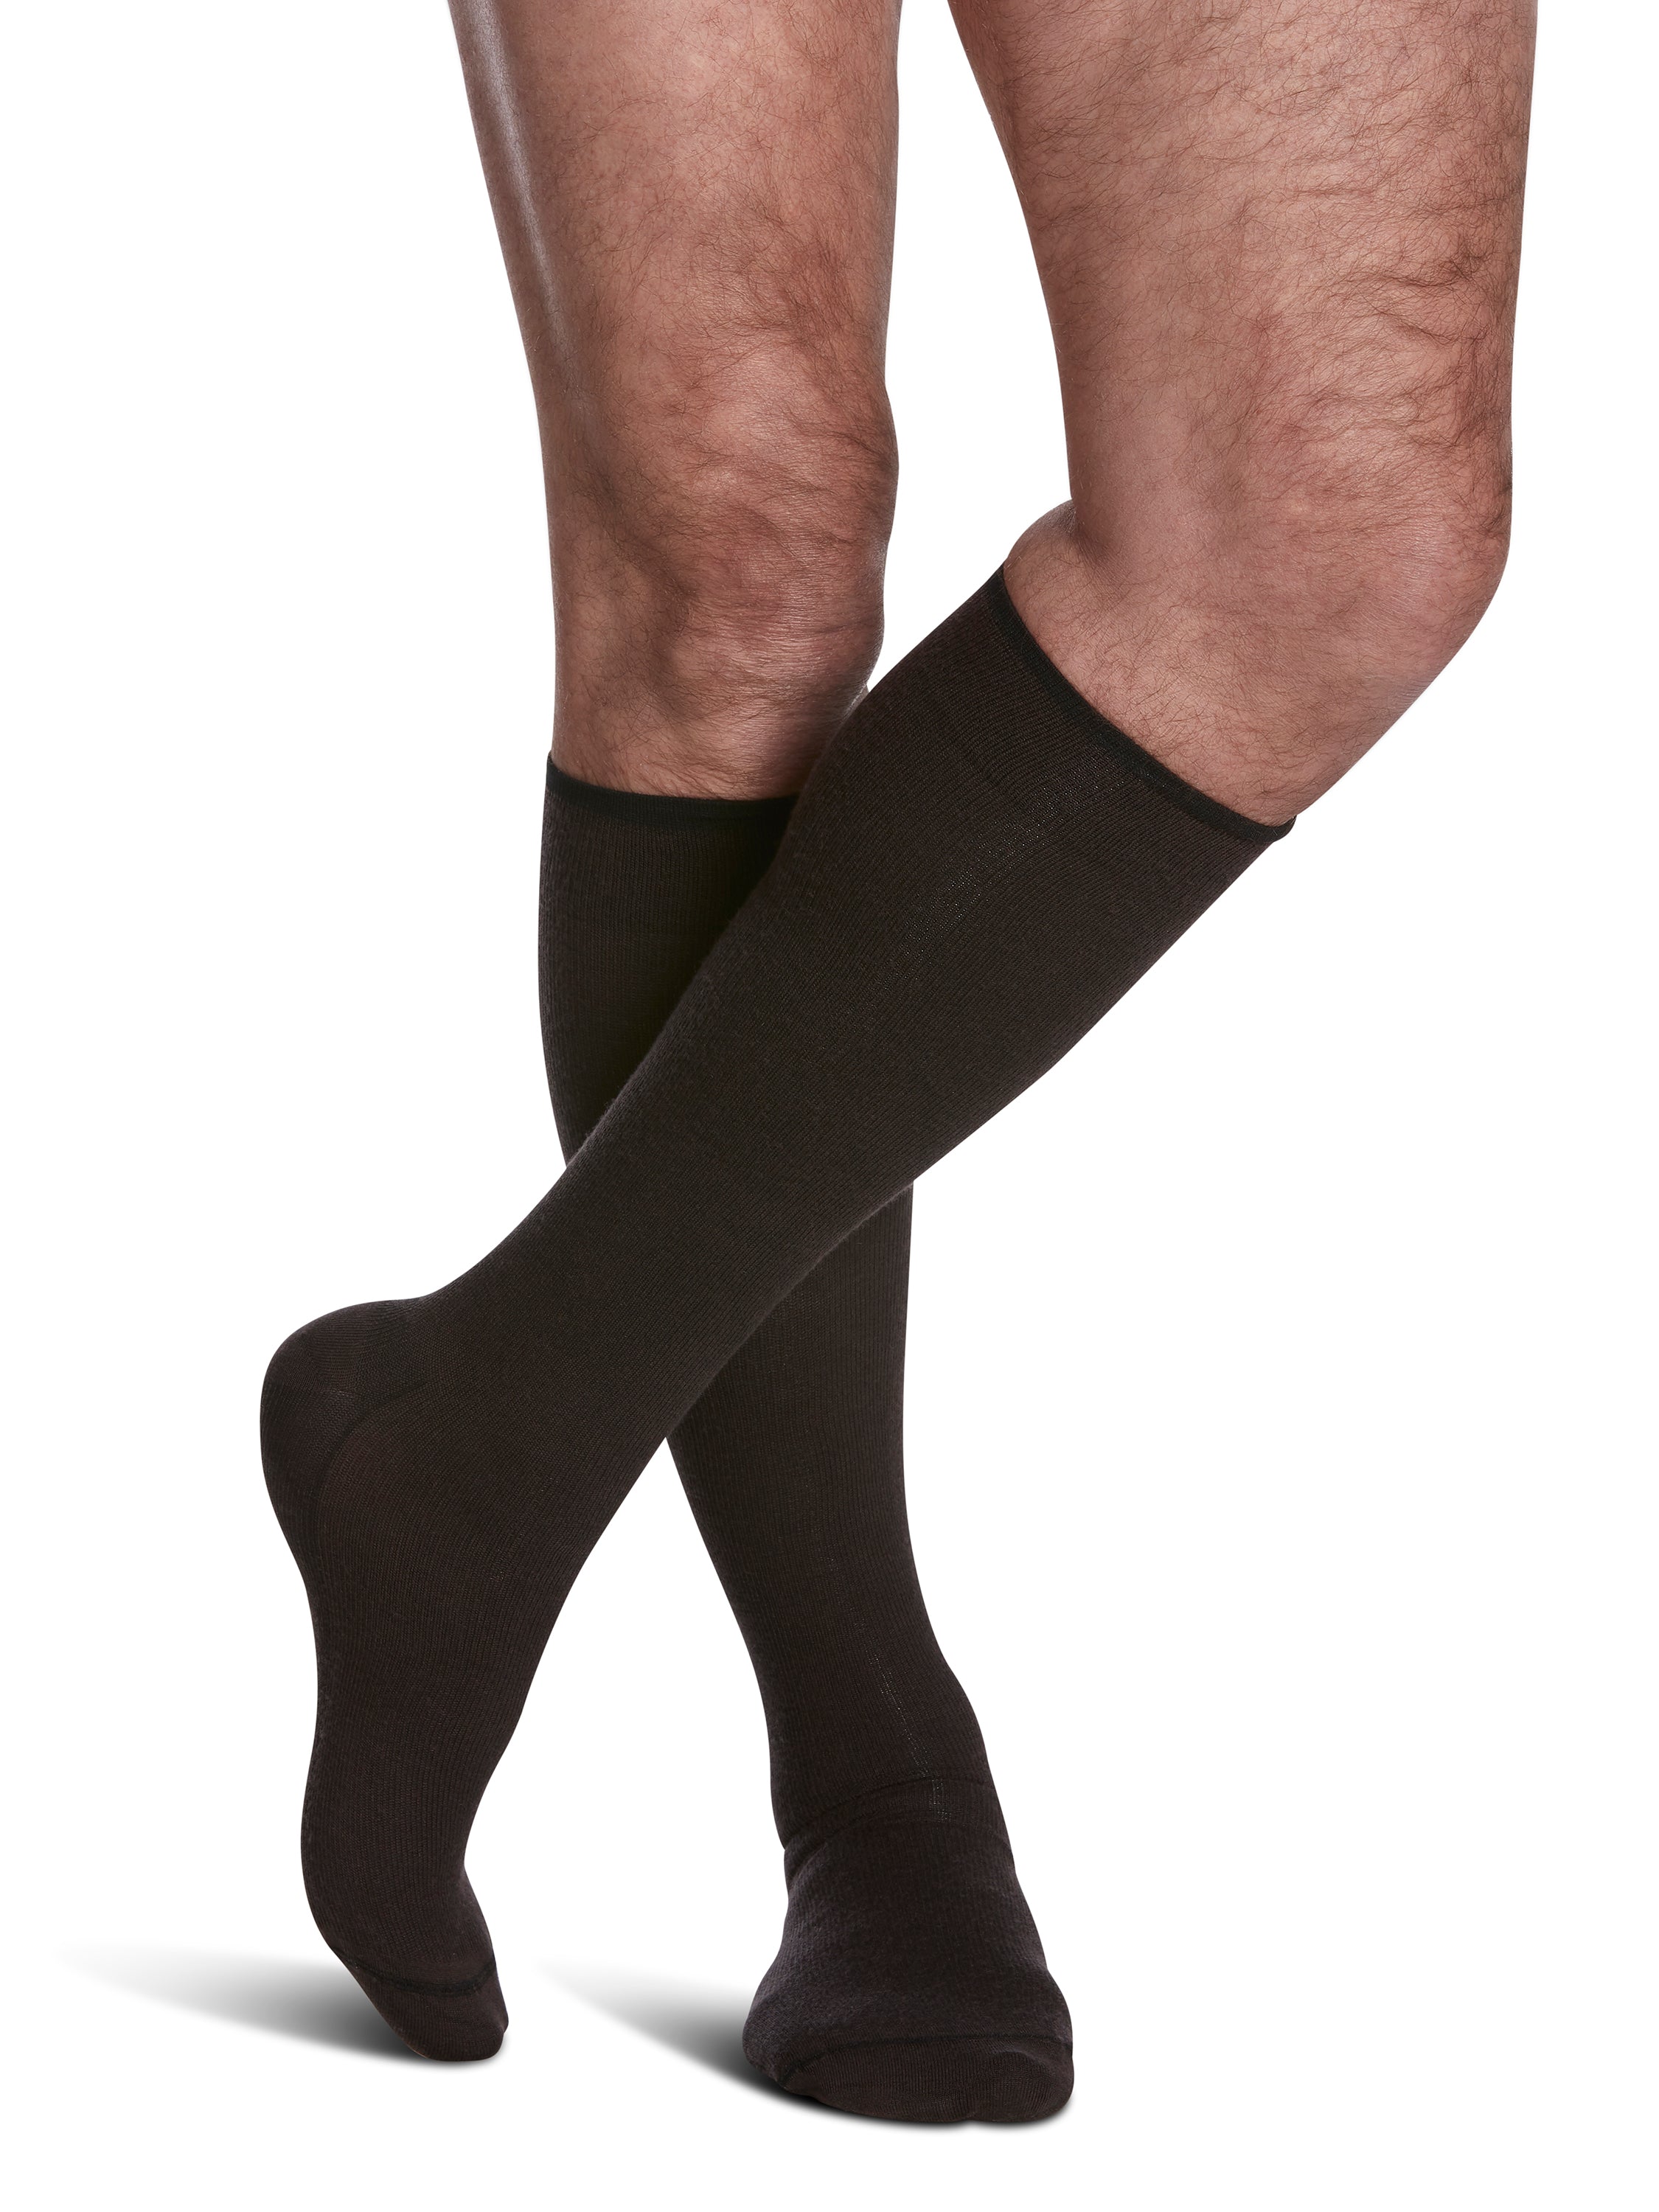 Men's ALL SEASON MERINO WOOL compression socks